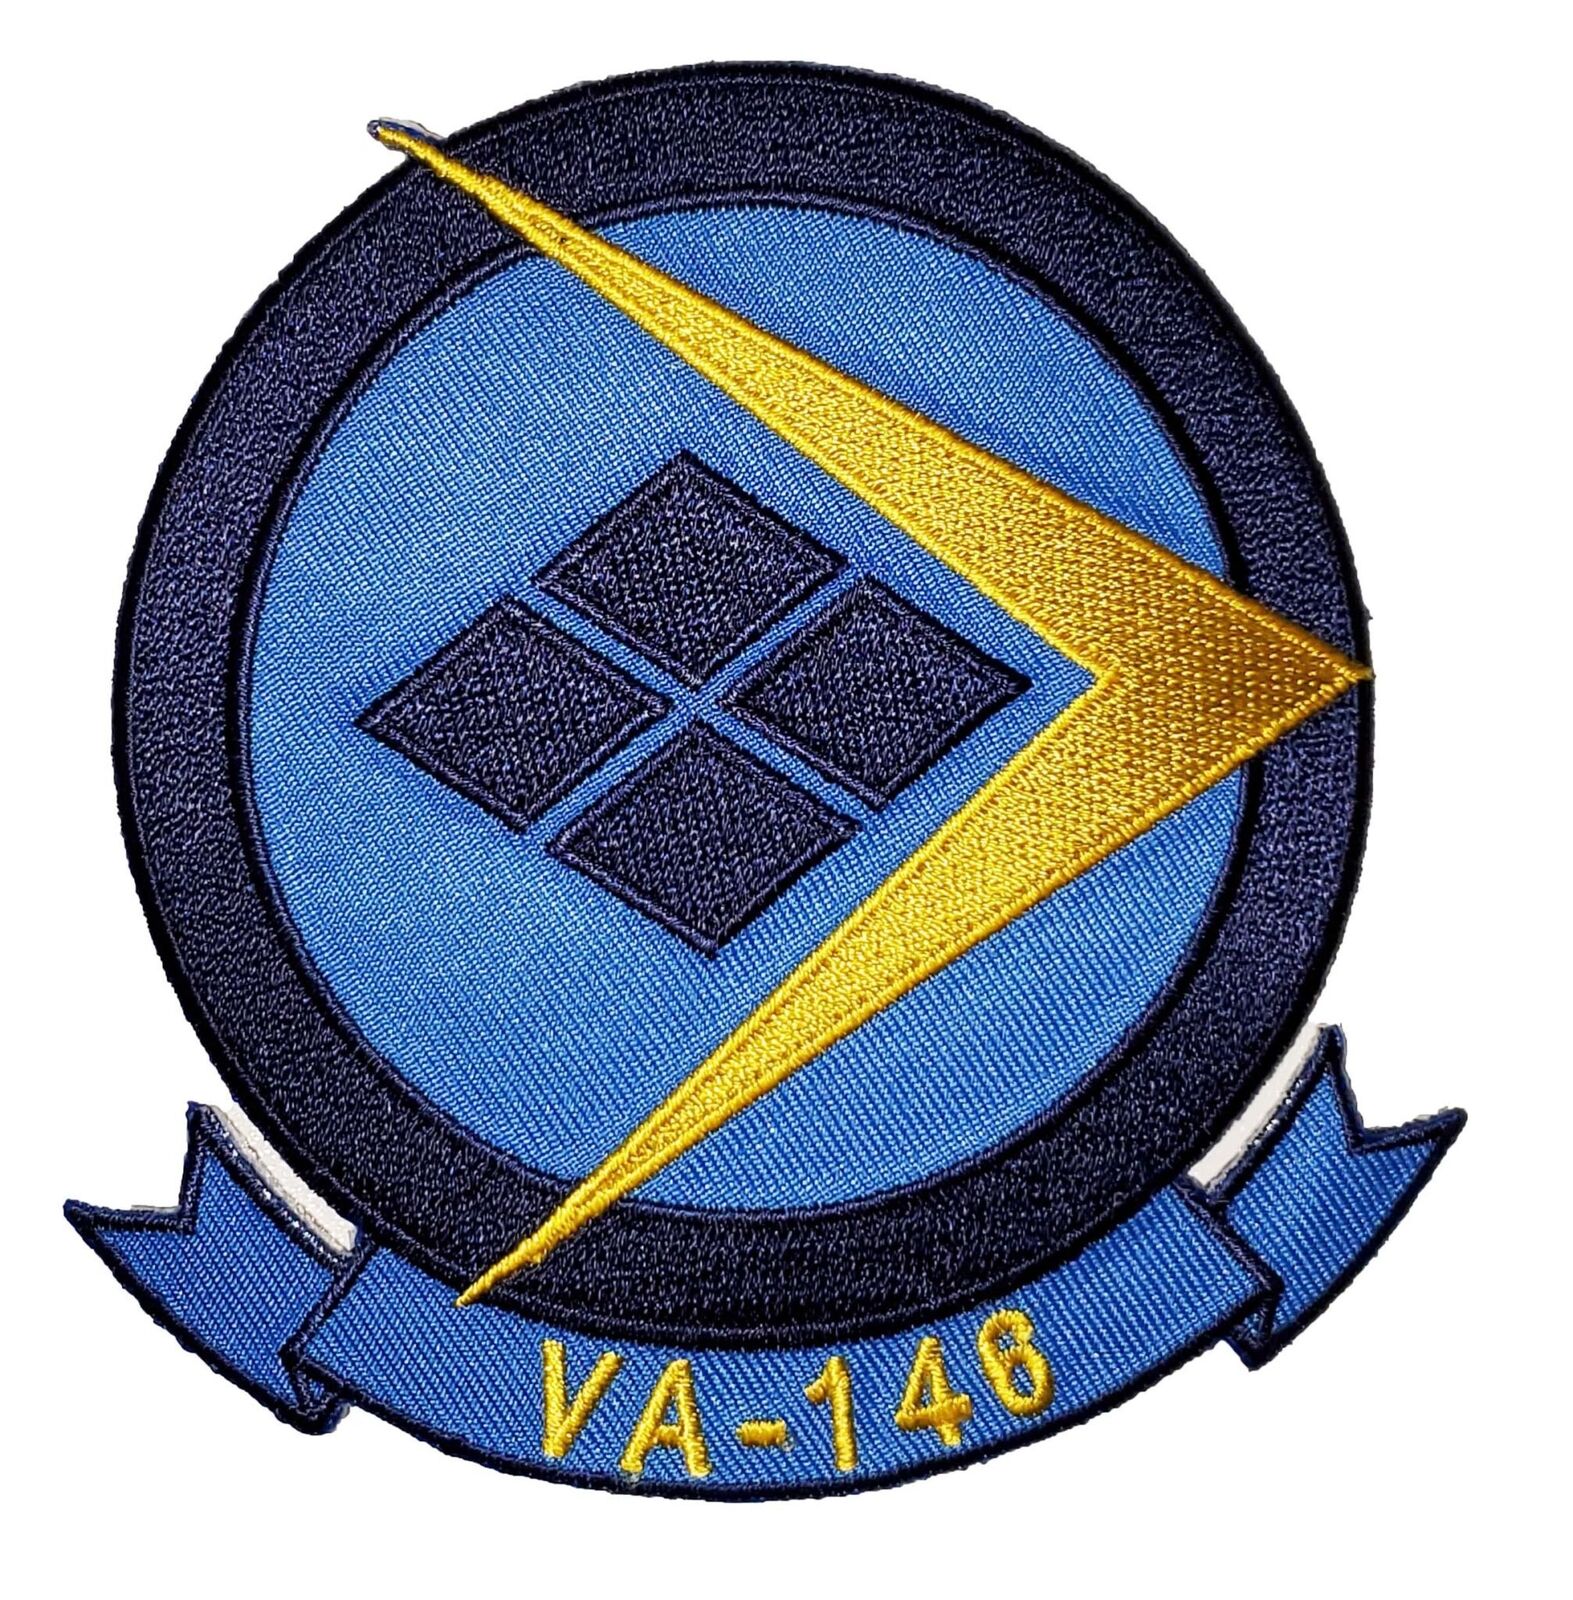 VA-146 Blue Diamonds Squadron Patch -Sew On